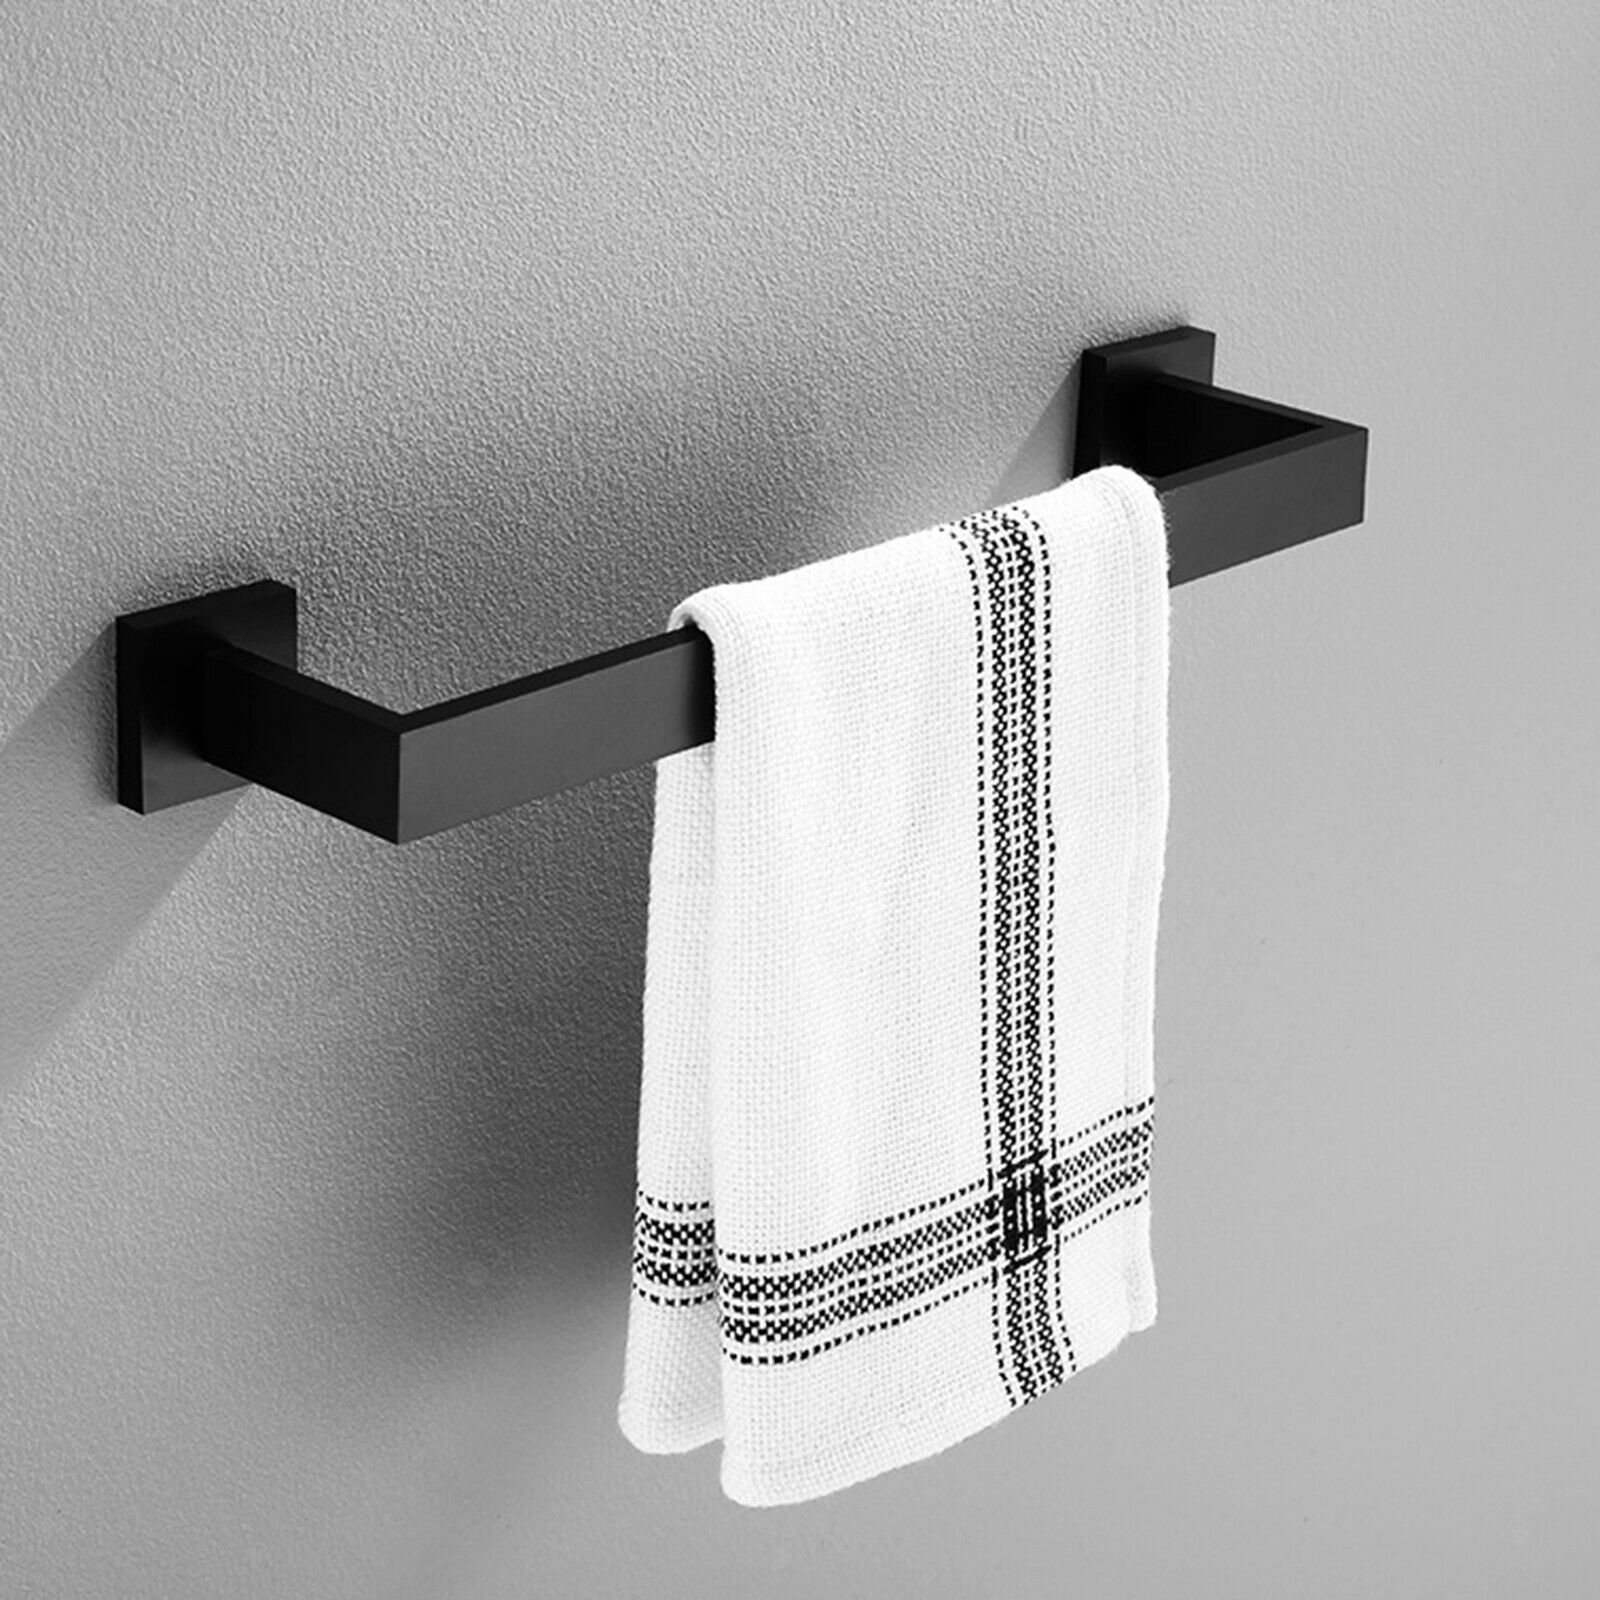 Matte Black Bathroom Hardware Set Wall Mounted Includes 16" Hand Towel Bar